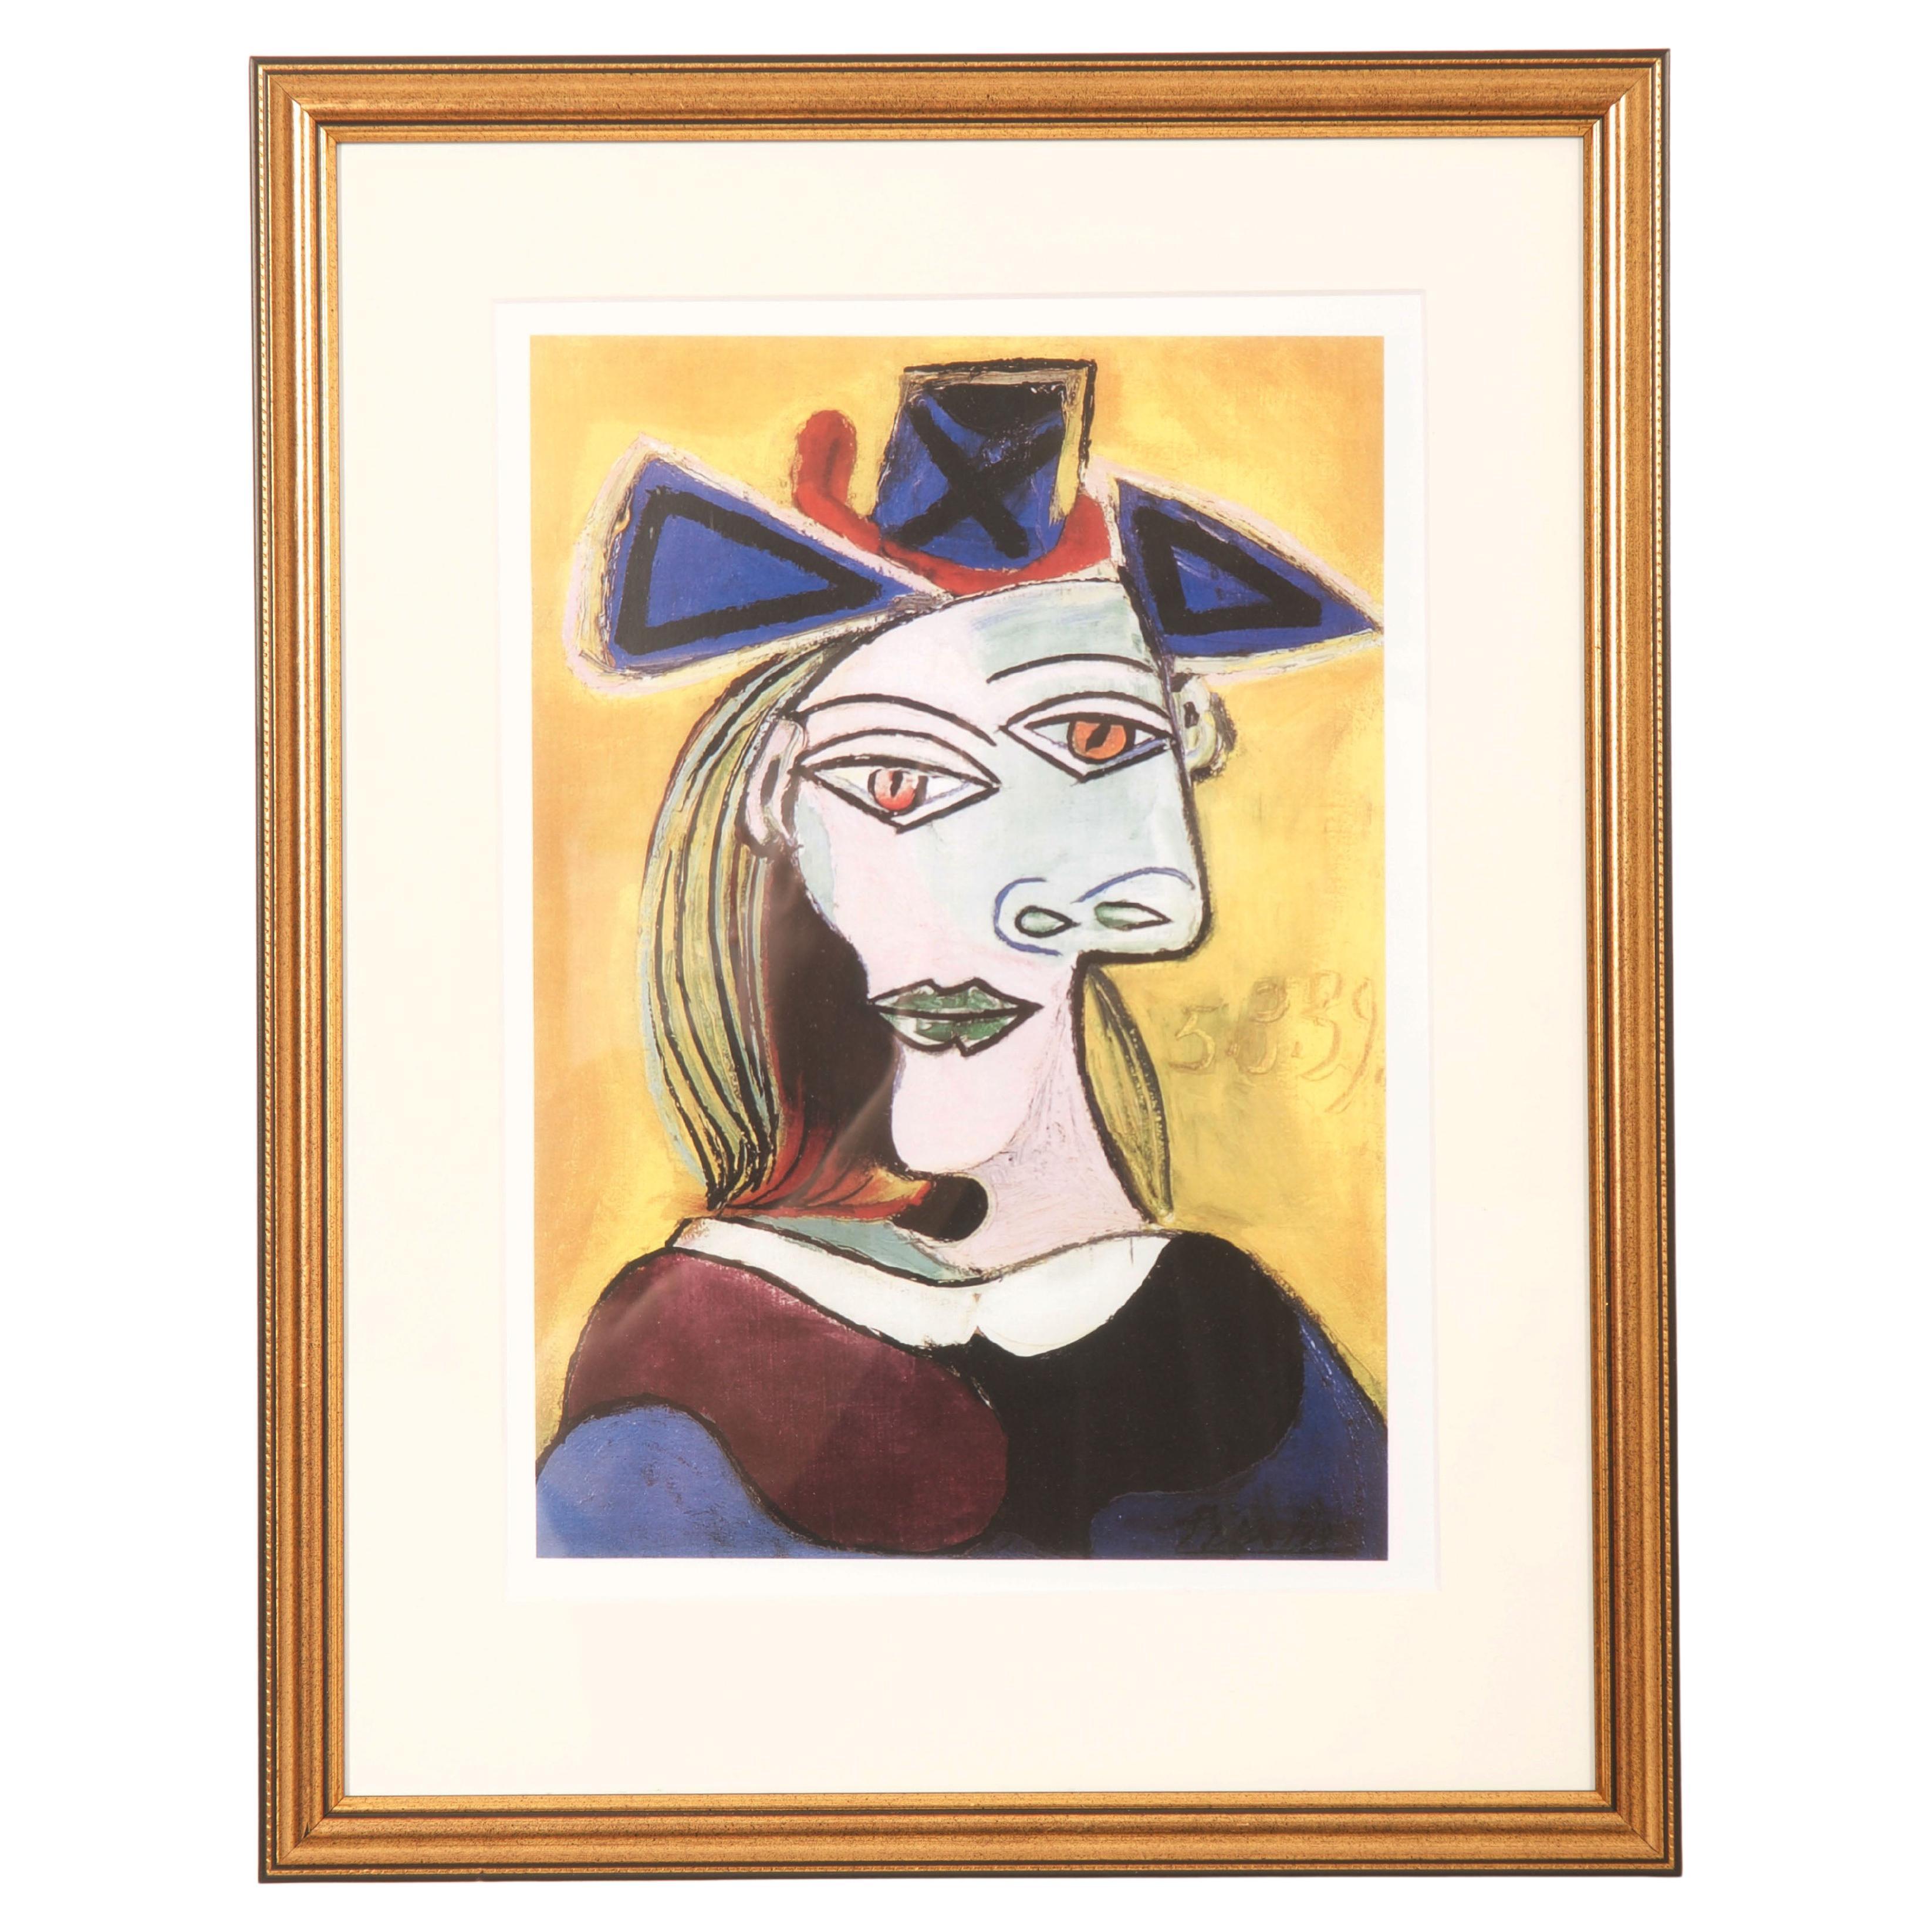 (after) Pablo Picasso "Femme Avec Le Chapeau" (Mujer con sombrero)